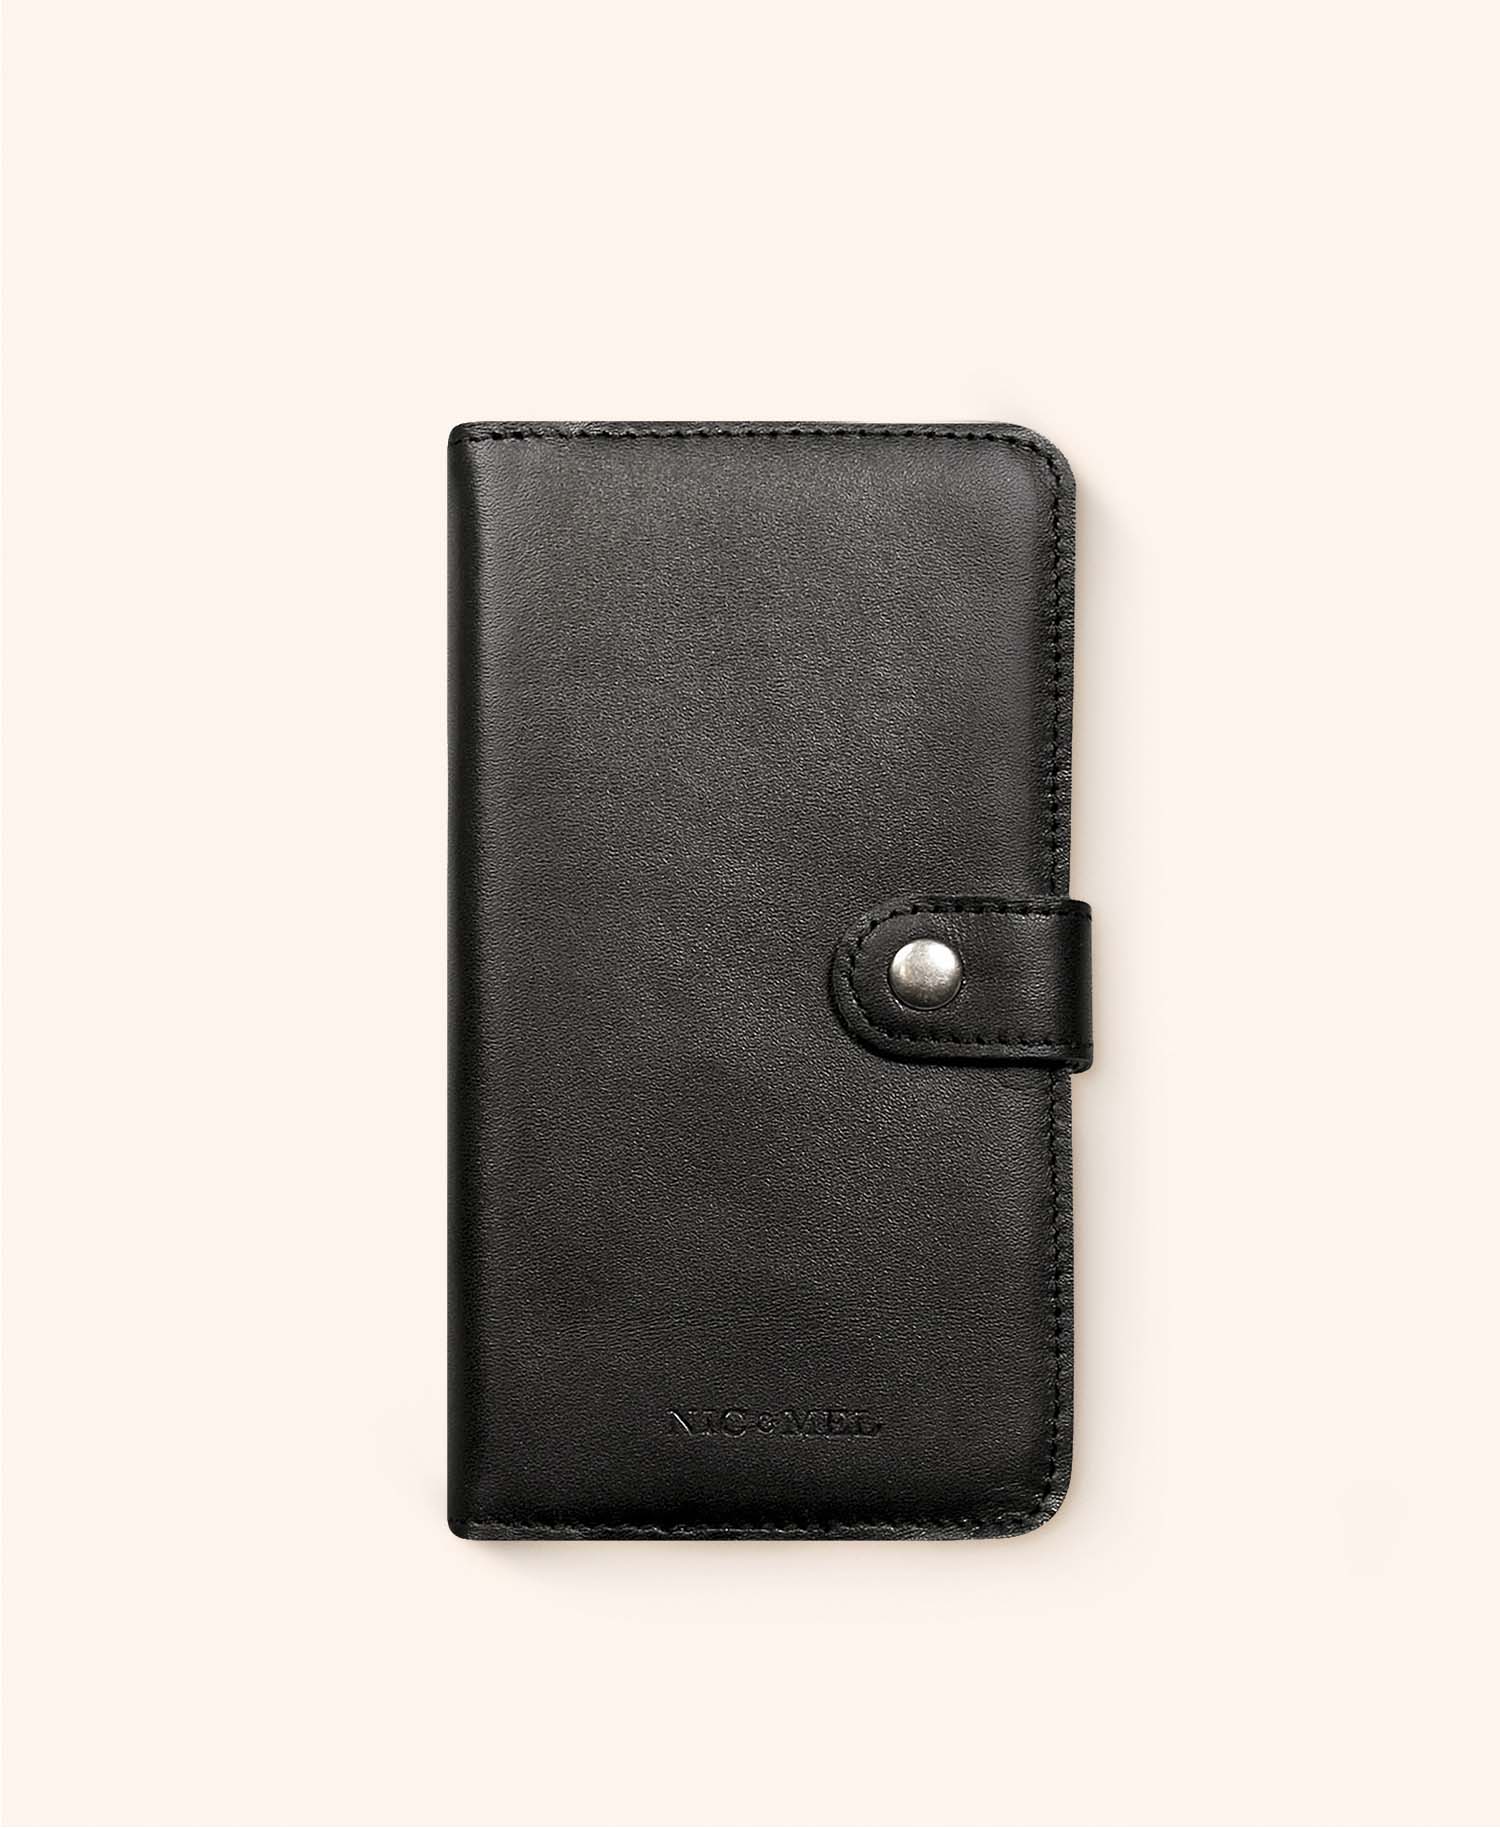 Andrew black wallet iphone 11 Pro